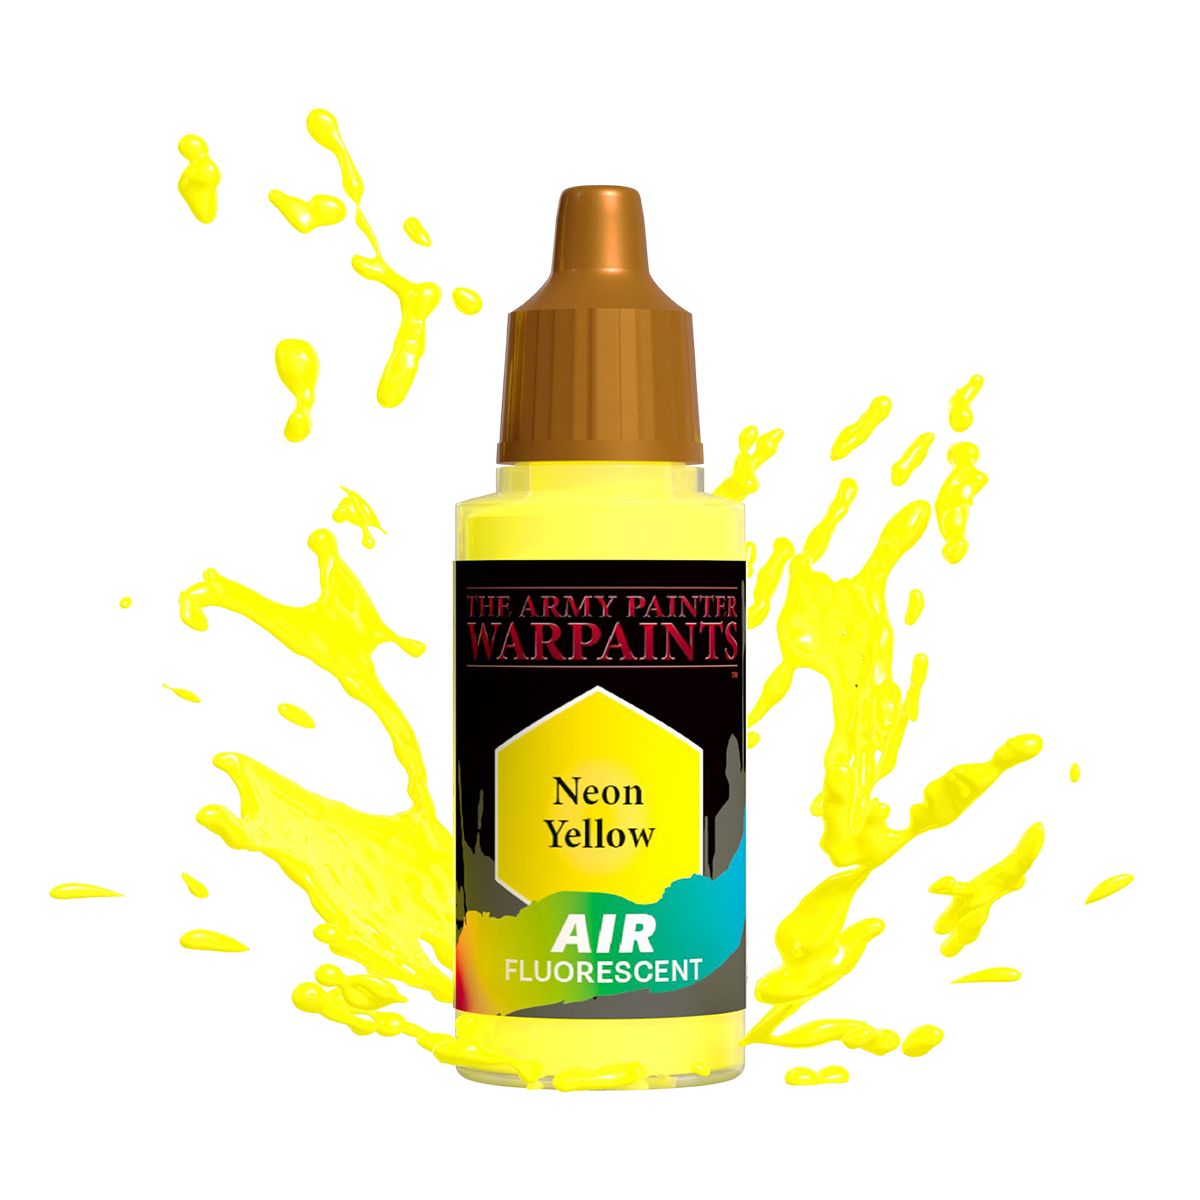 Army Painter Warpaints Air Fluorescent: Neon Yellow 18ml